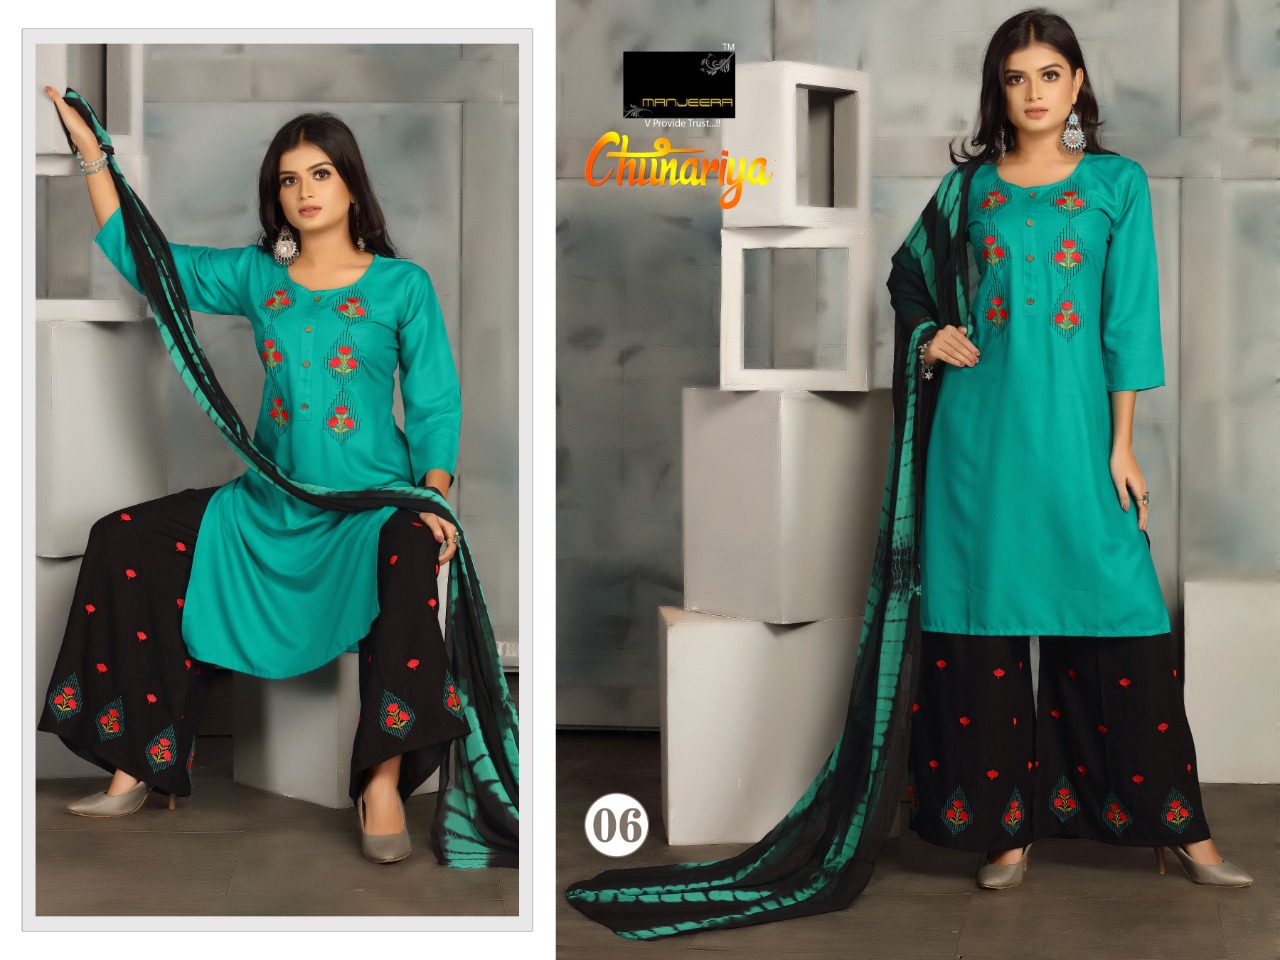 Manjeera chunariya elagant and modern Stylish classic trendy fits Kurties in wholesale